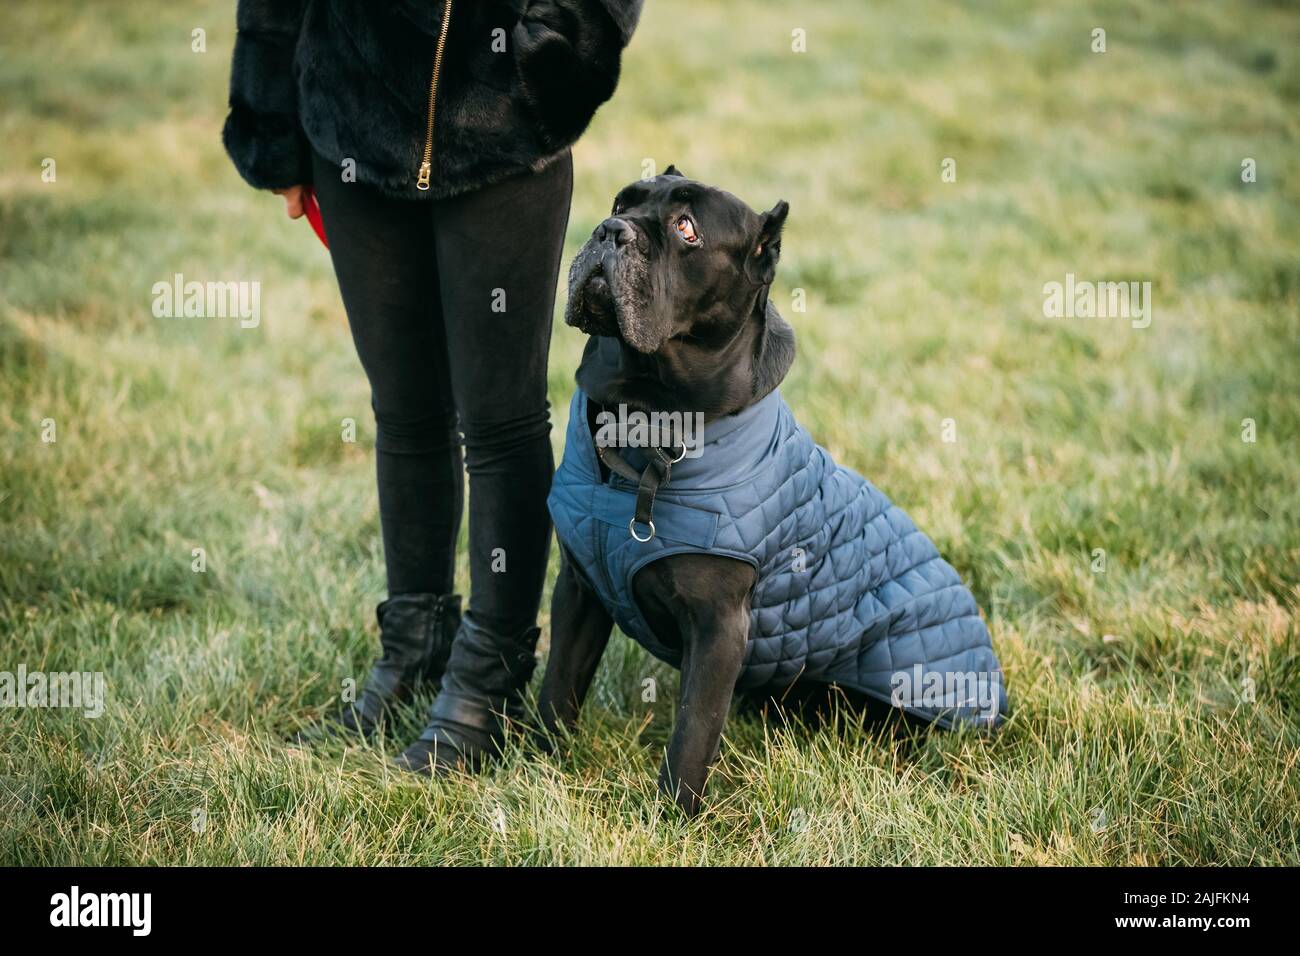 Black Cane Corso Dog Sitting Near Human. Dog Wears In Warm Clothes. Big Dog Breeds. Stock Photo